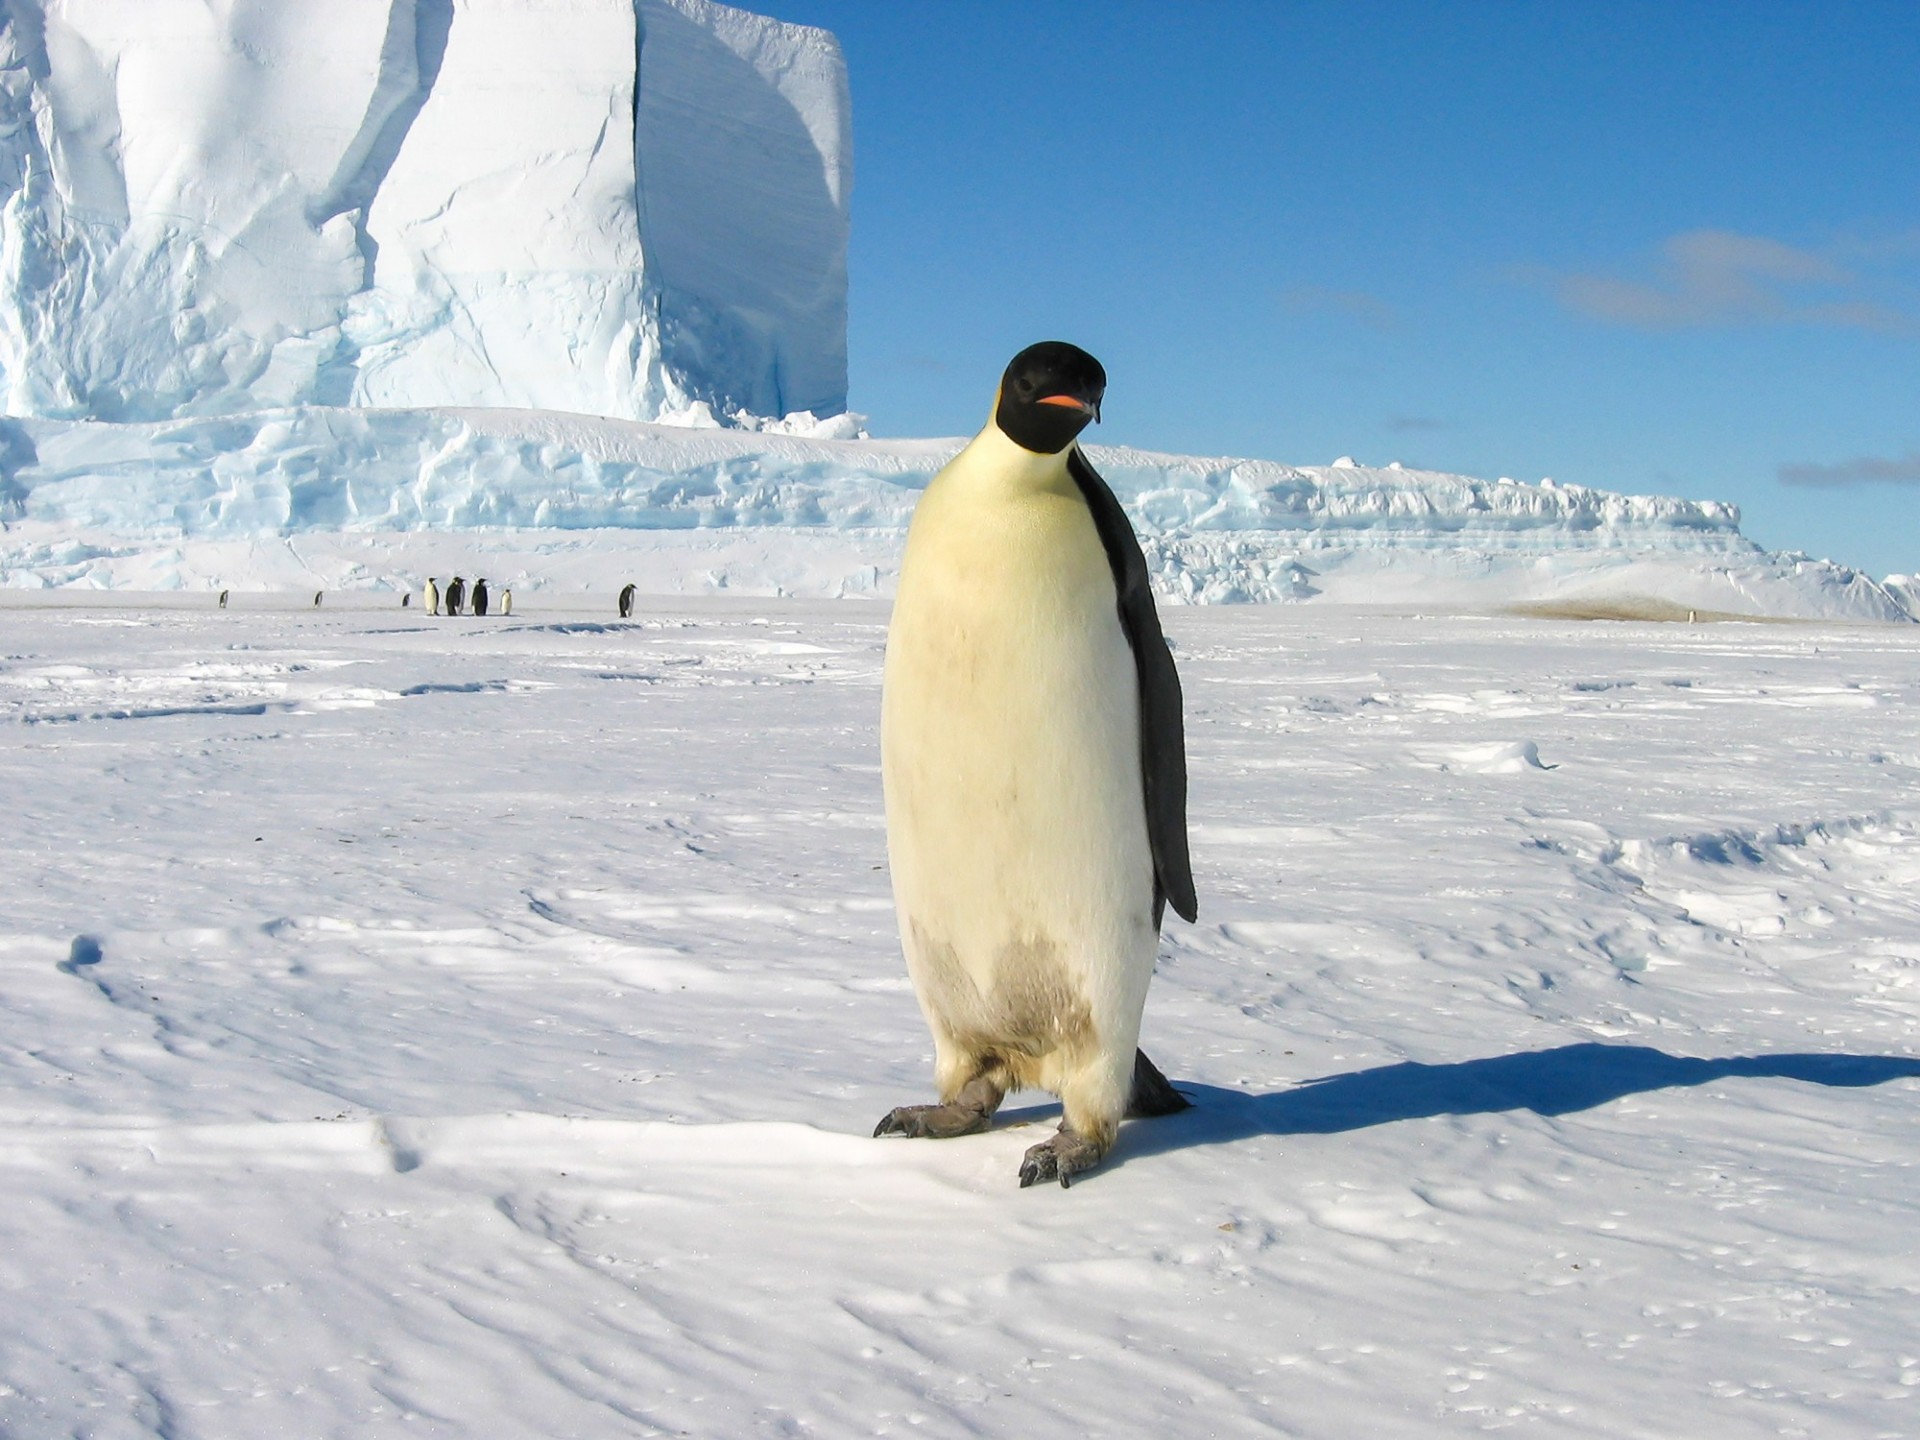 Emperor Penguin at Edge of Cape Washington Penguin Colony in Terra Nova Bay Antarctica by Nick Frearson